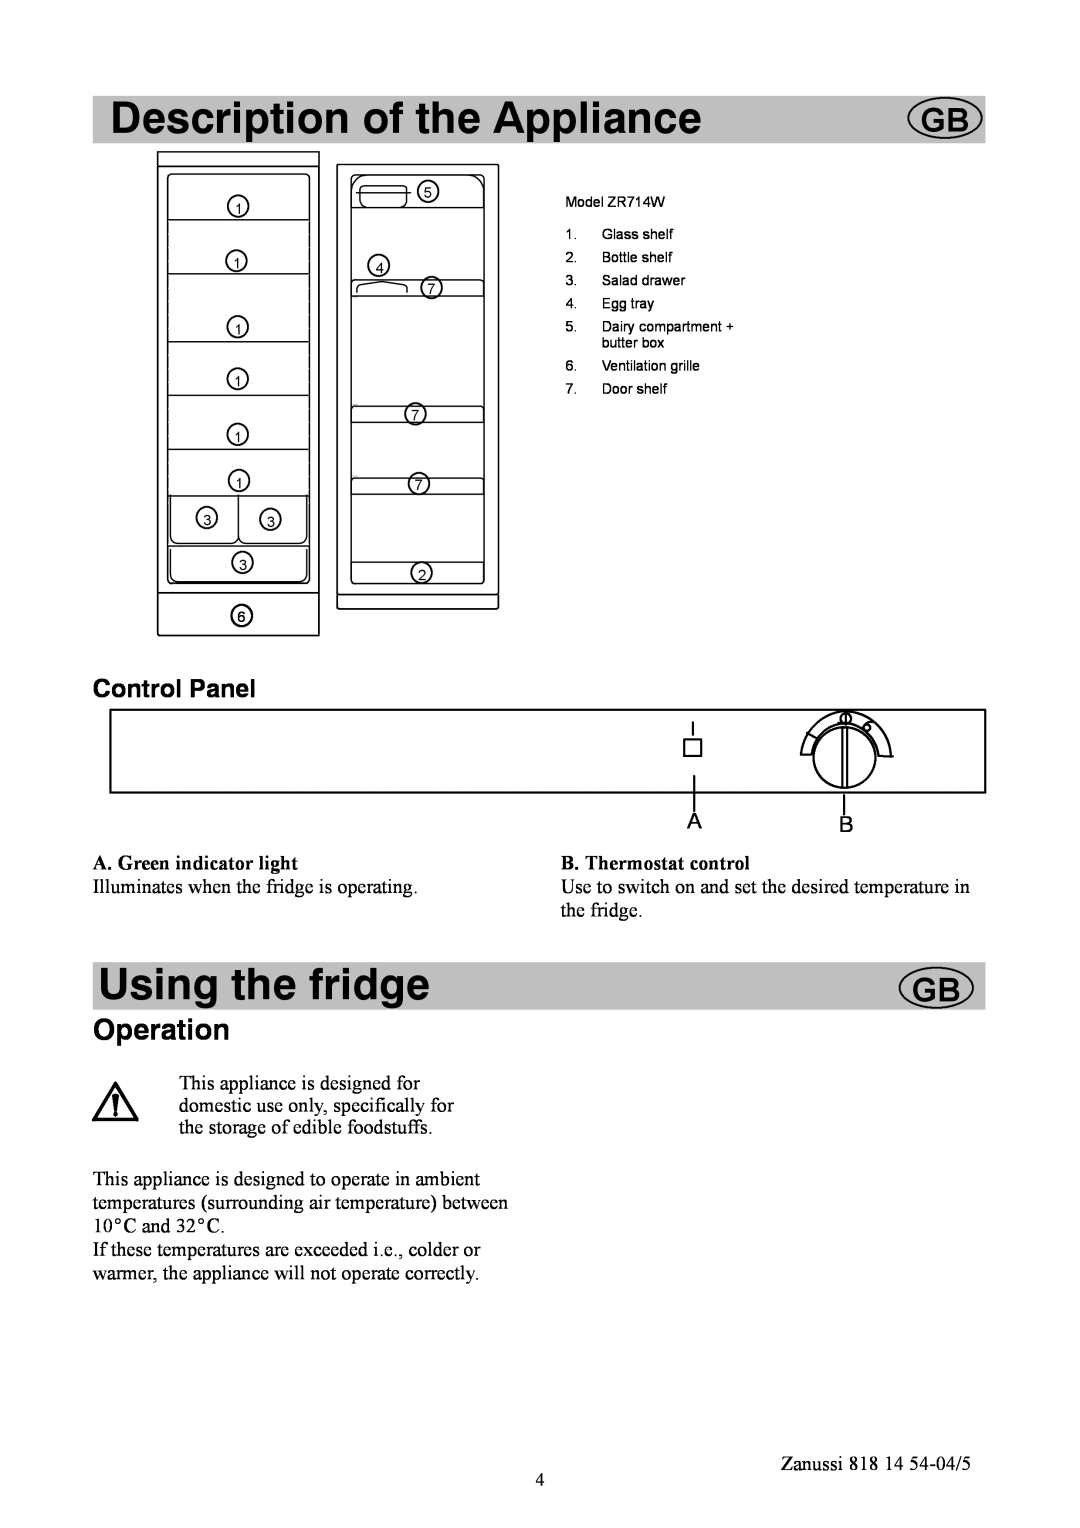 Zanussi ZR714W manual Description of the Appliance, Using the fridge, Operation, Control Panel, A. Green indicator light 